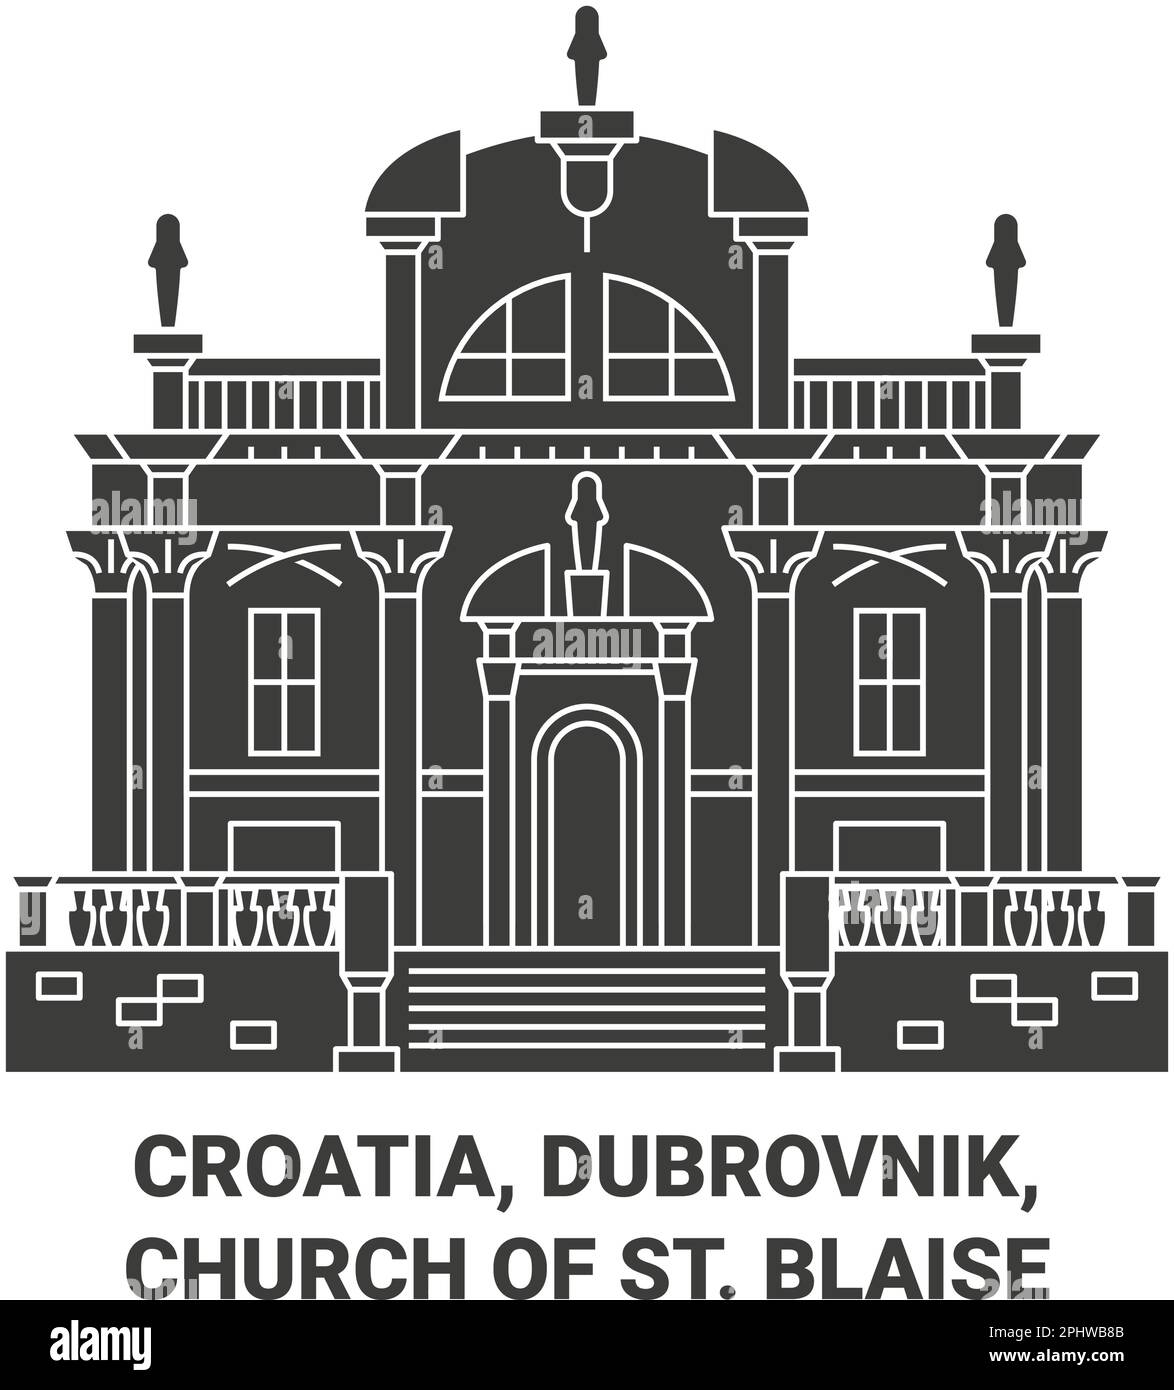 Croatia, Dubrovnik, Church Of St. Blaise travel landmark vector illustration Stock Vector